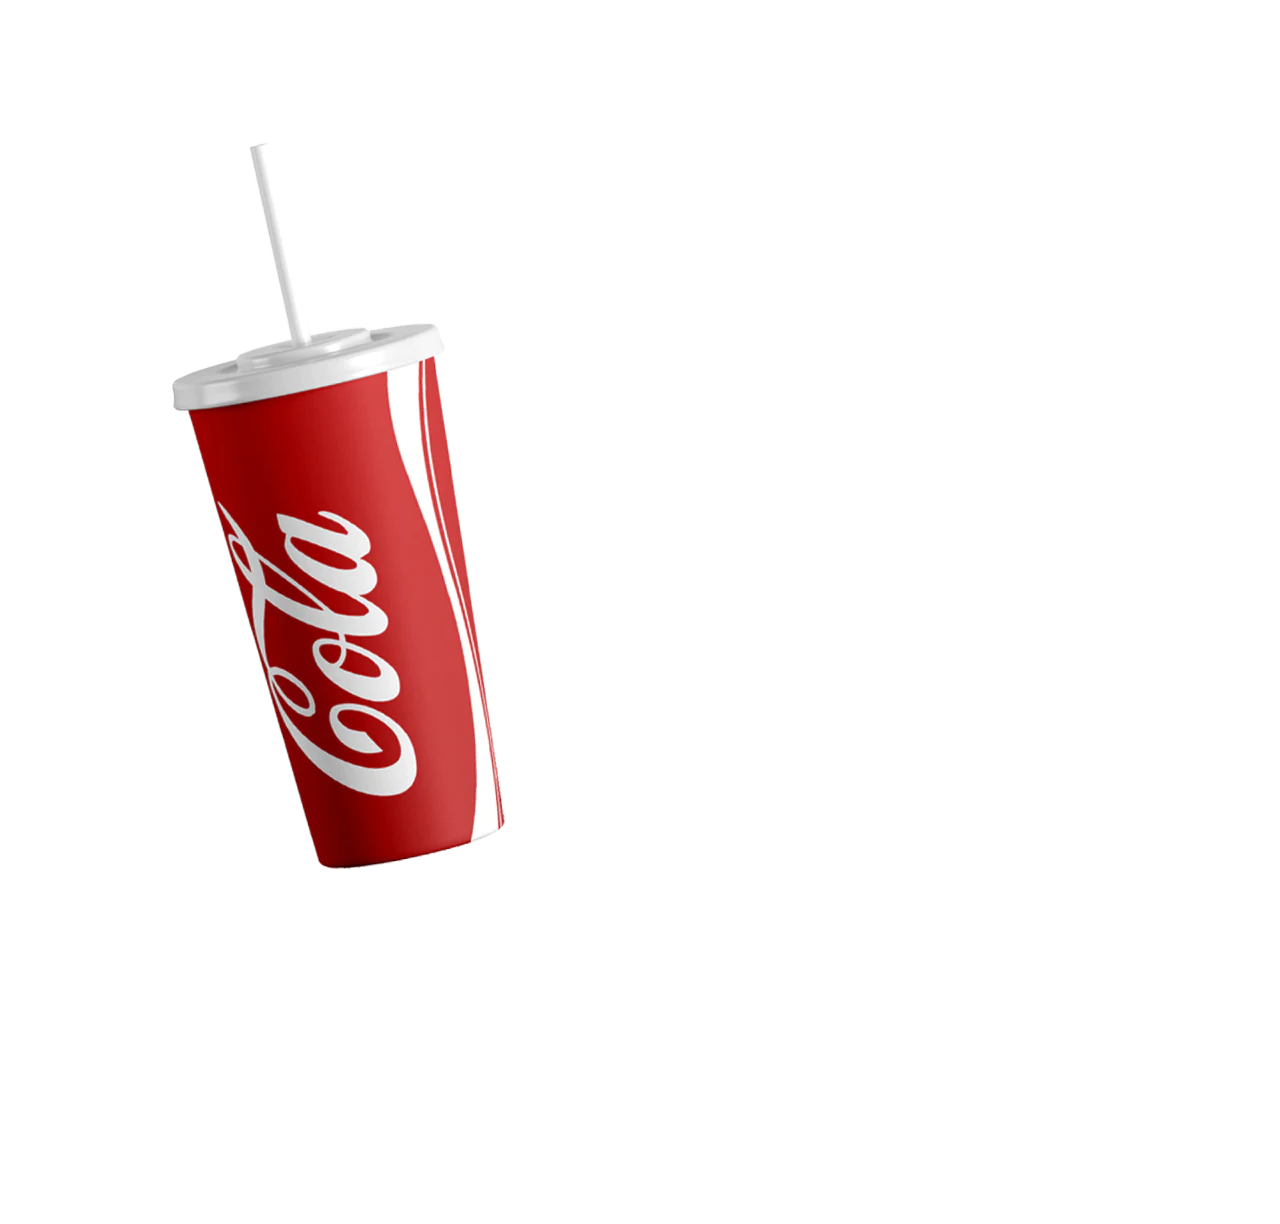 Cinema Coke Motion Design by OnFyre